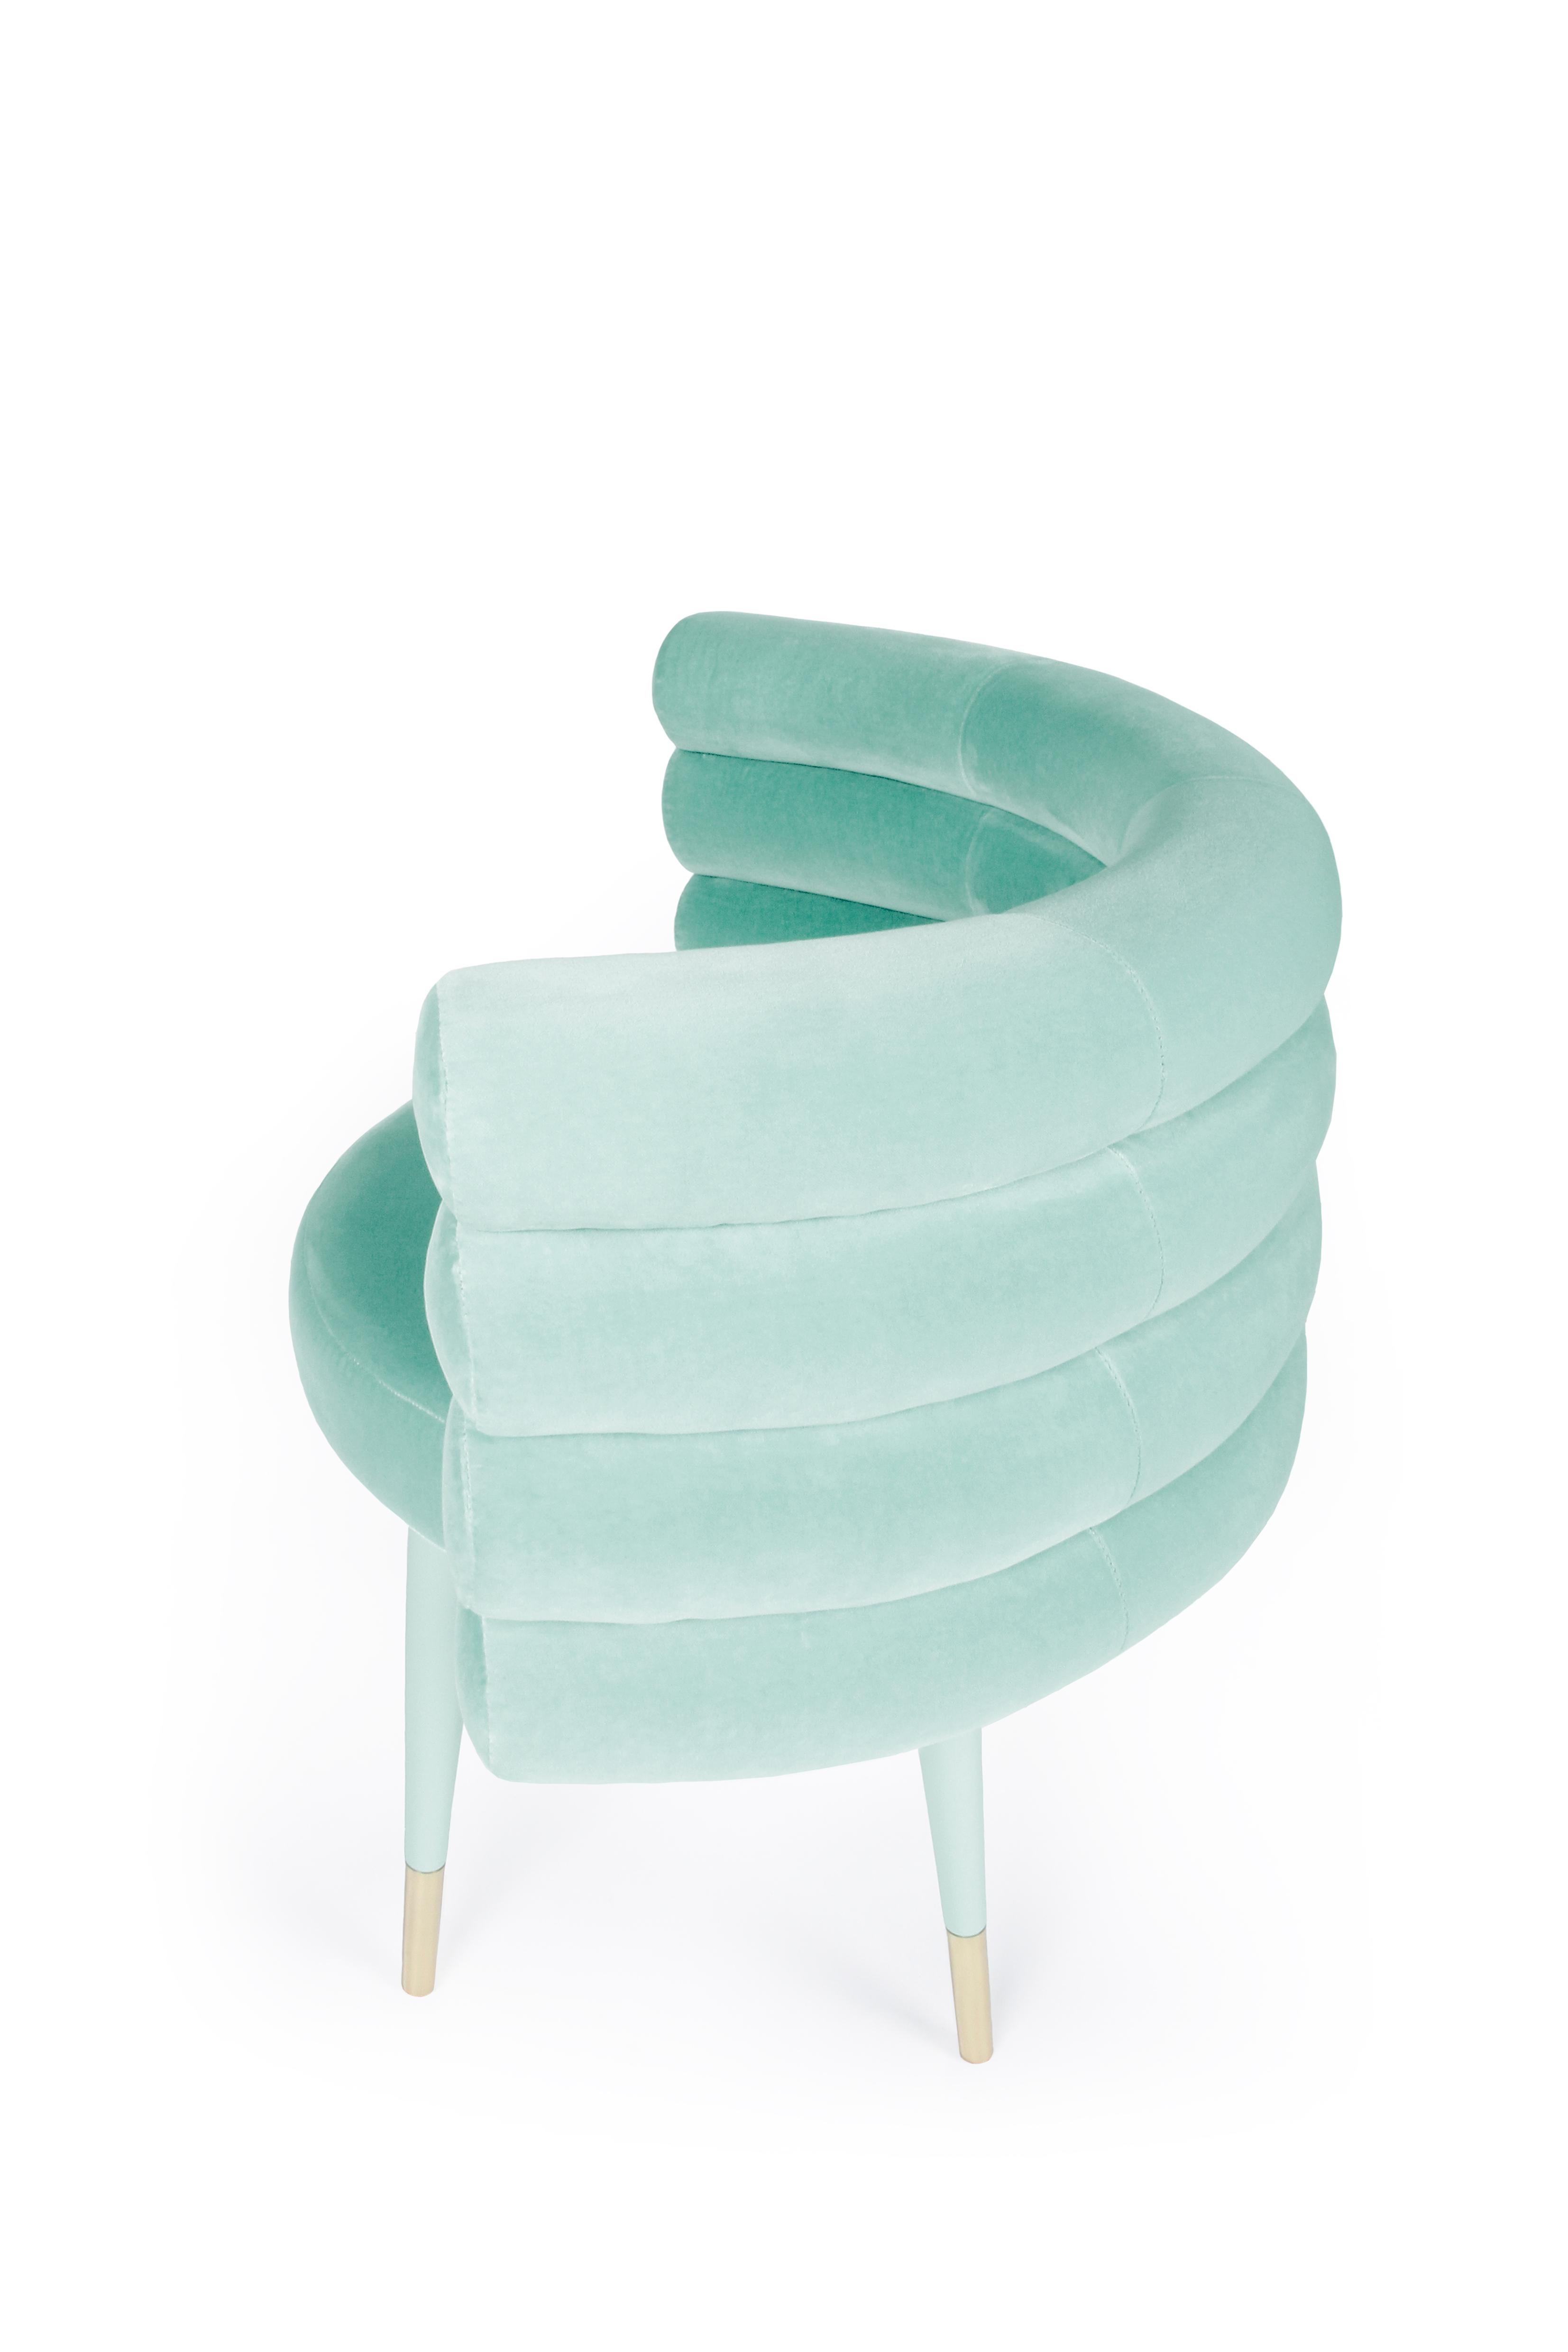 mint green chair